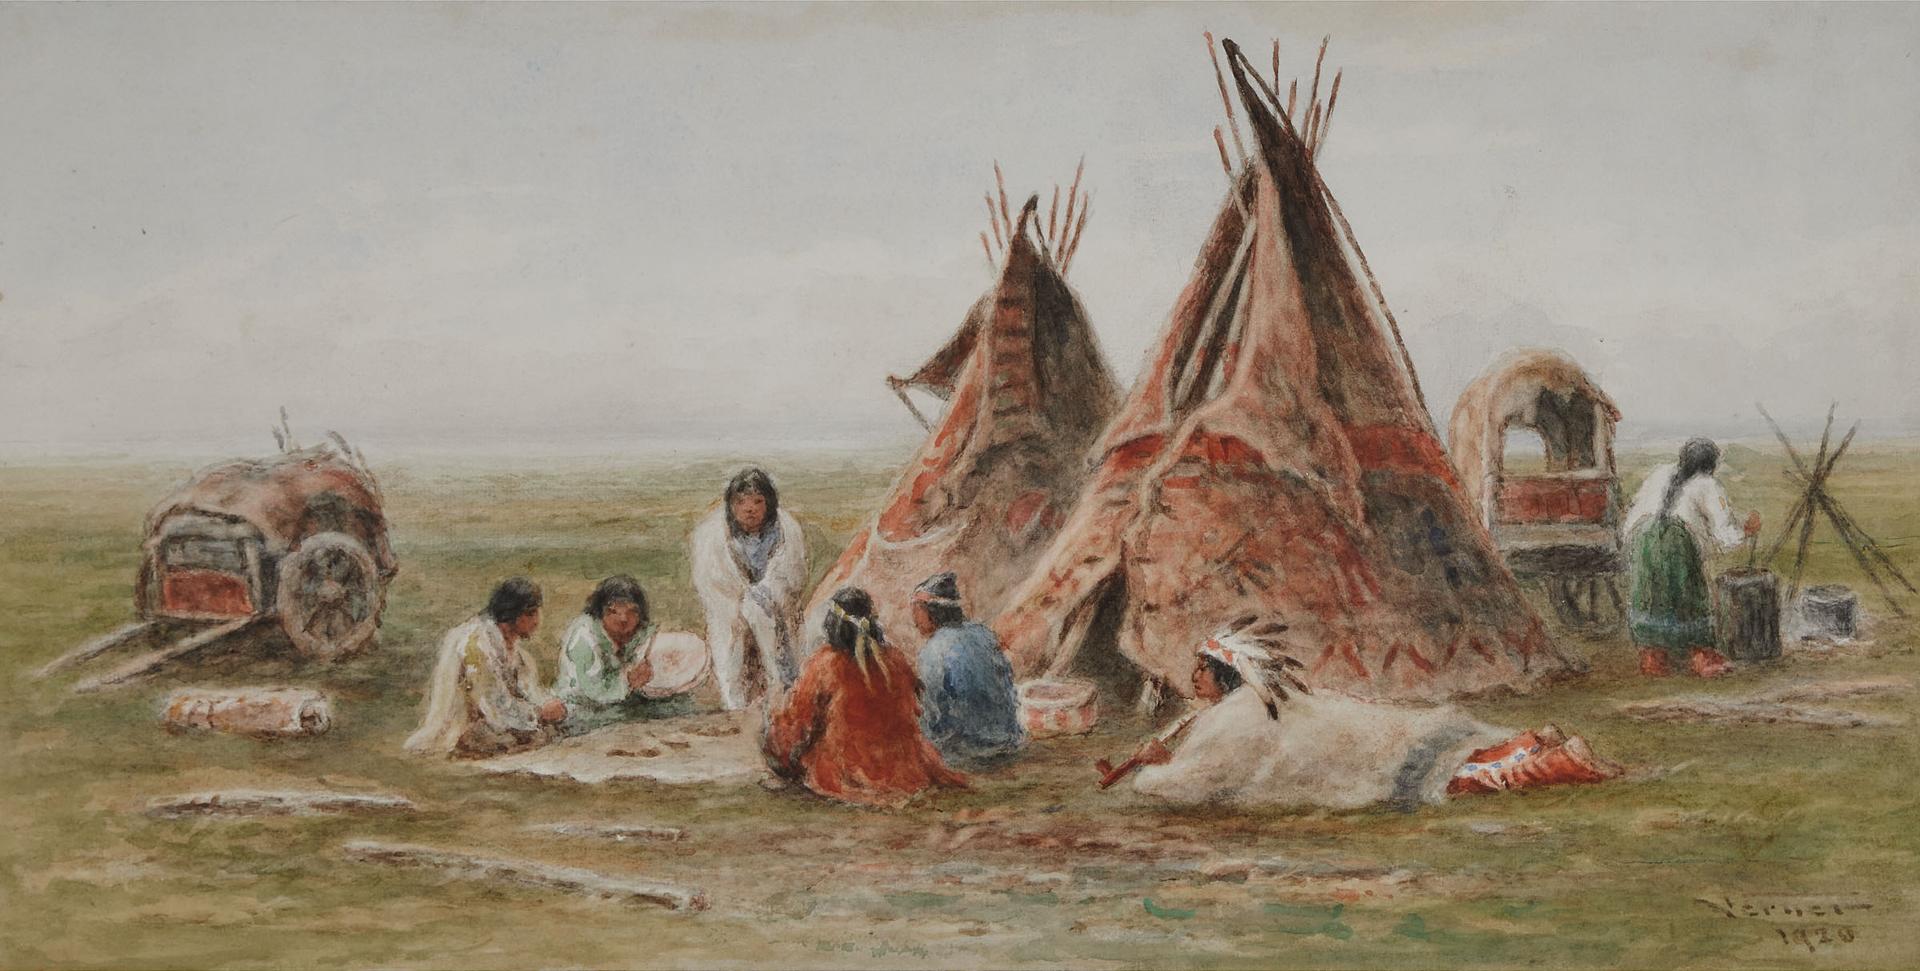 Frederick Arthur Verner (1836-1928) - Sioux Indians Gambling, 1920